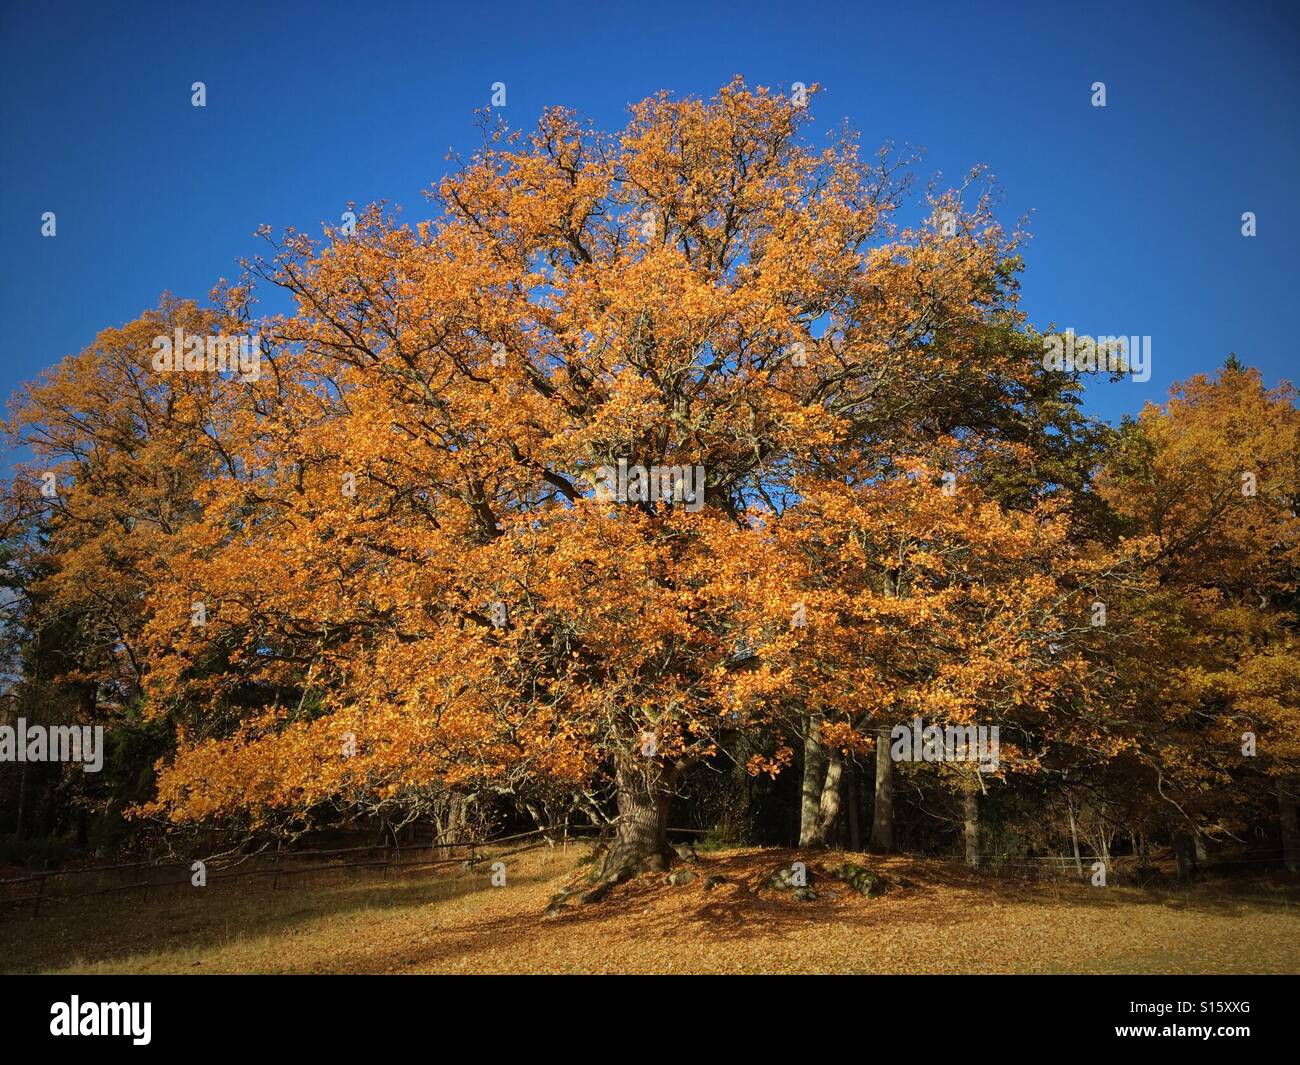 Albero di quercia con autunno / cadono le foglie d'arancio Foto Stock